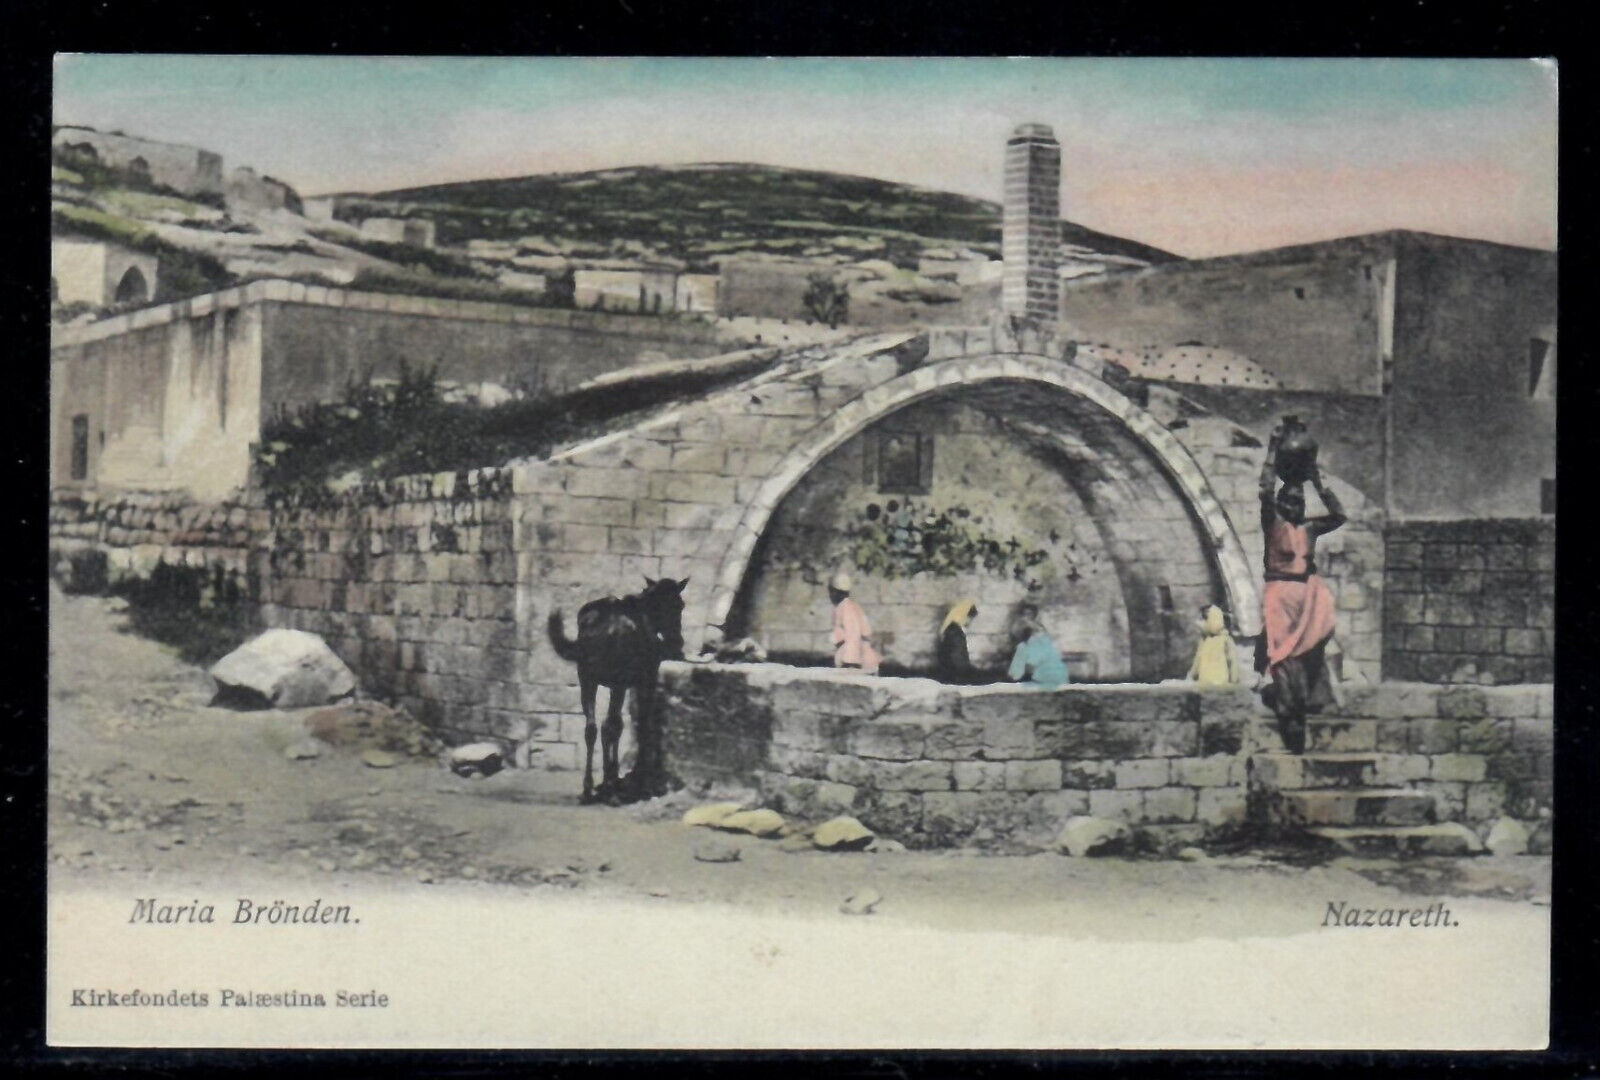 Nazareth Palestine Color postcard Publisher: Kirkefondets Palaestina Serie